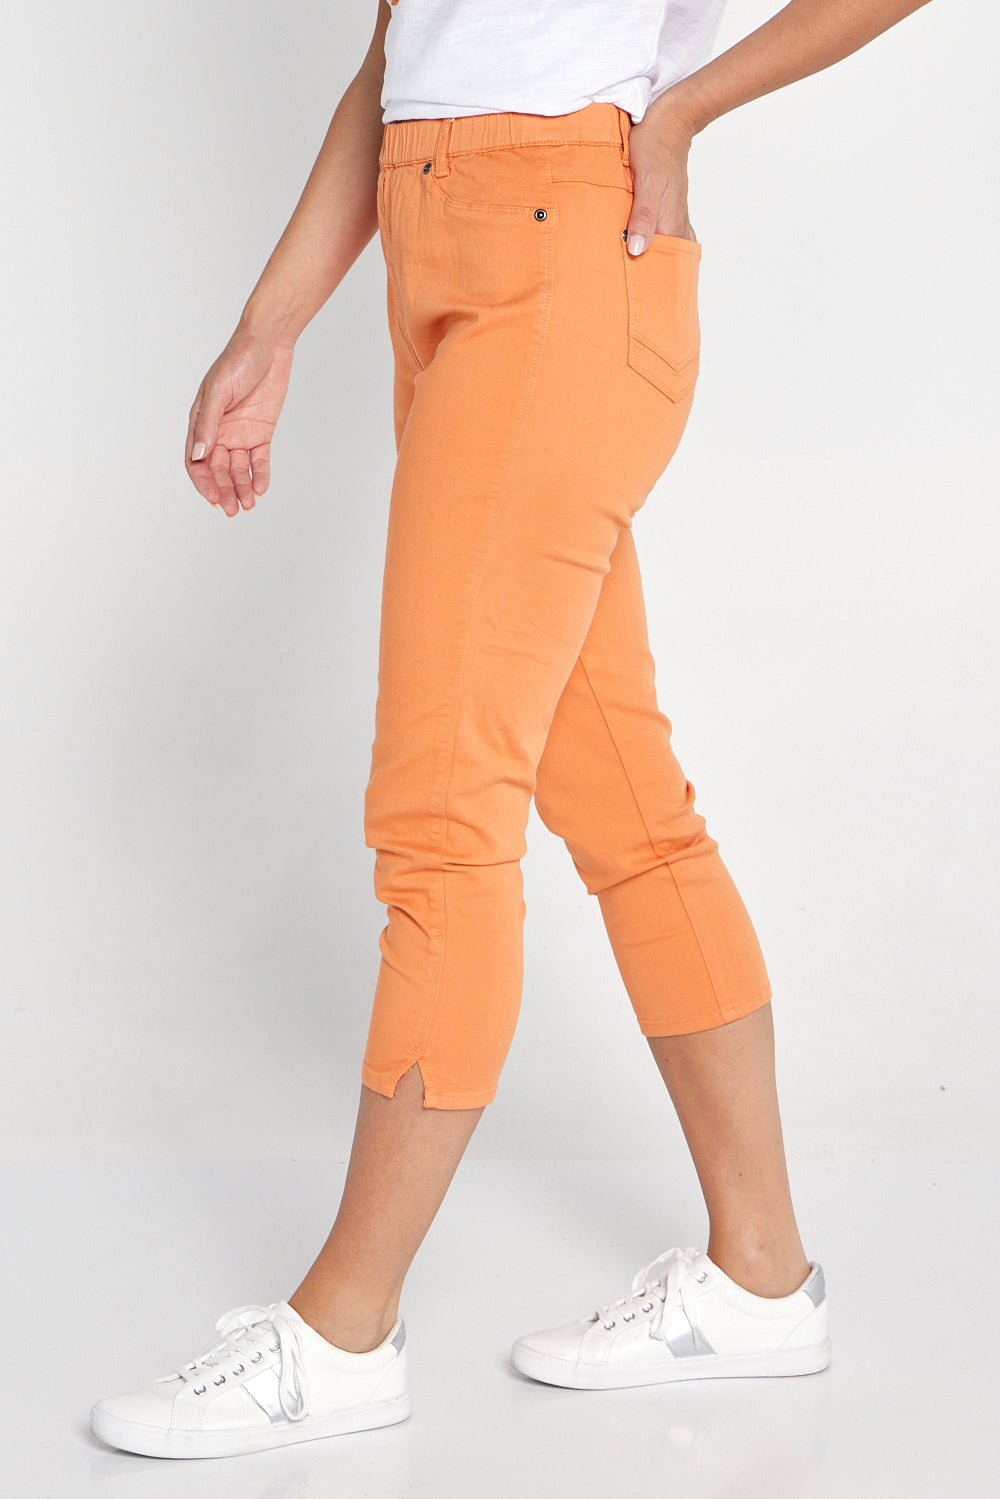 Stefani Capri Pants - Orange  Cafe Latte Stretch Cotton Capri Jegging –  TULIO Fashion